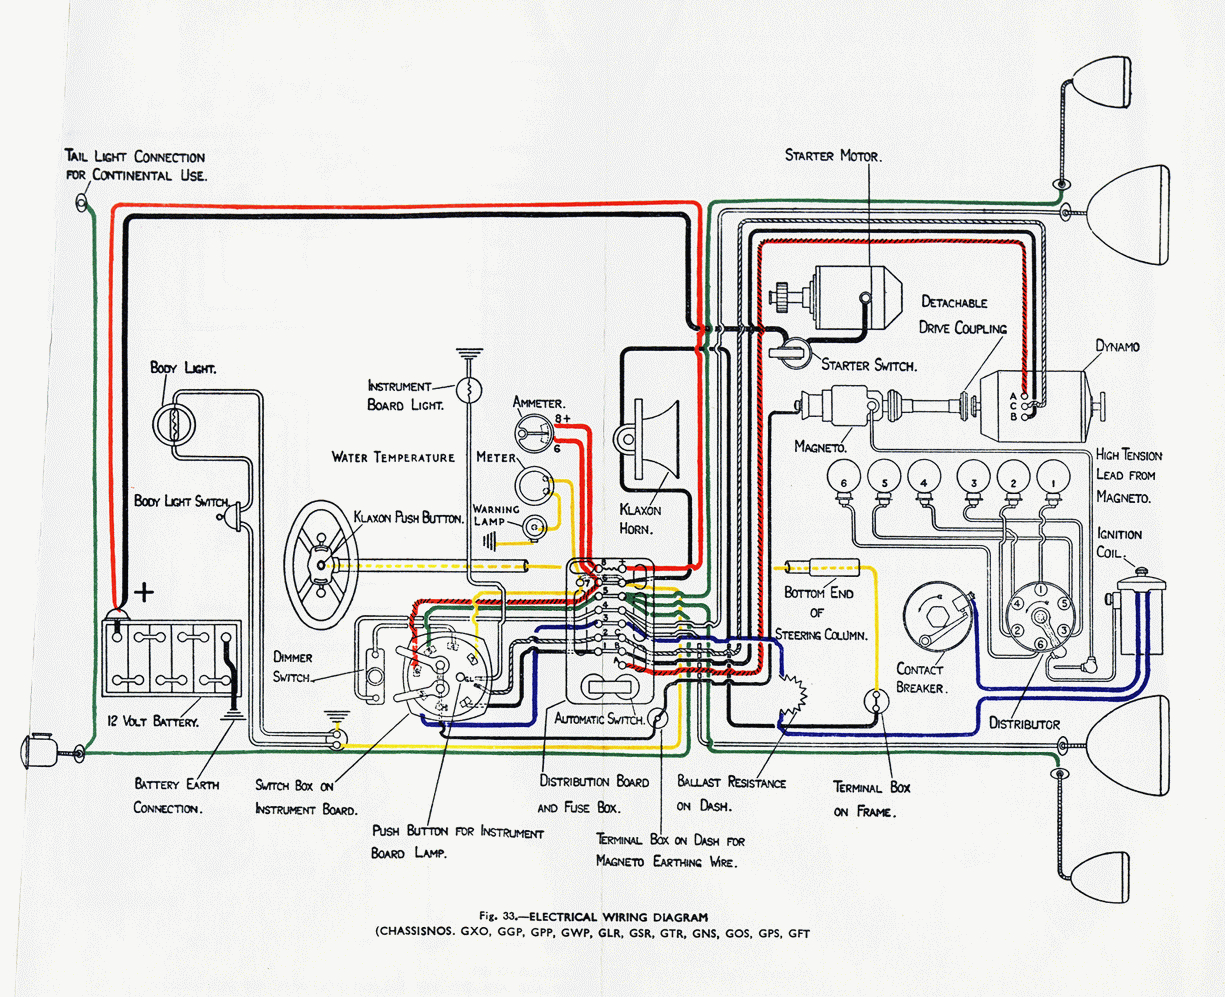 Goldstar Gps Wiring Diagram Collection - Wiring Diagram Sample